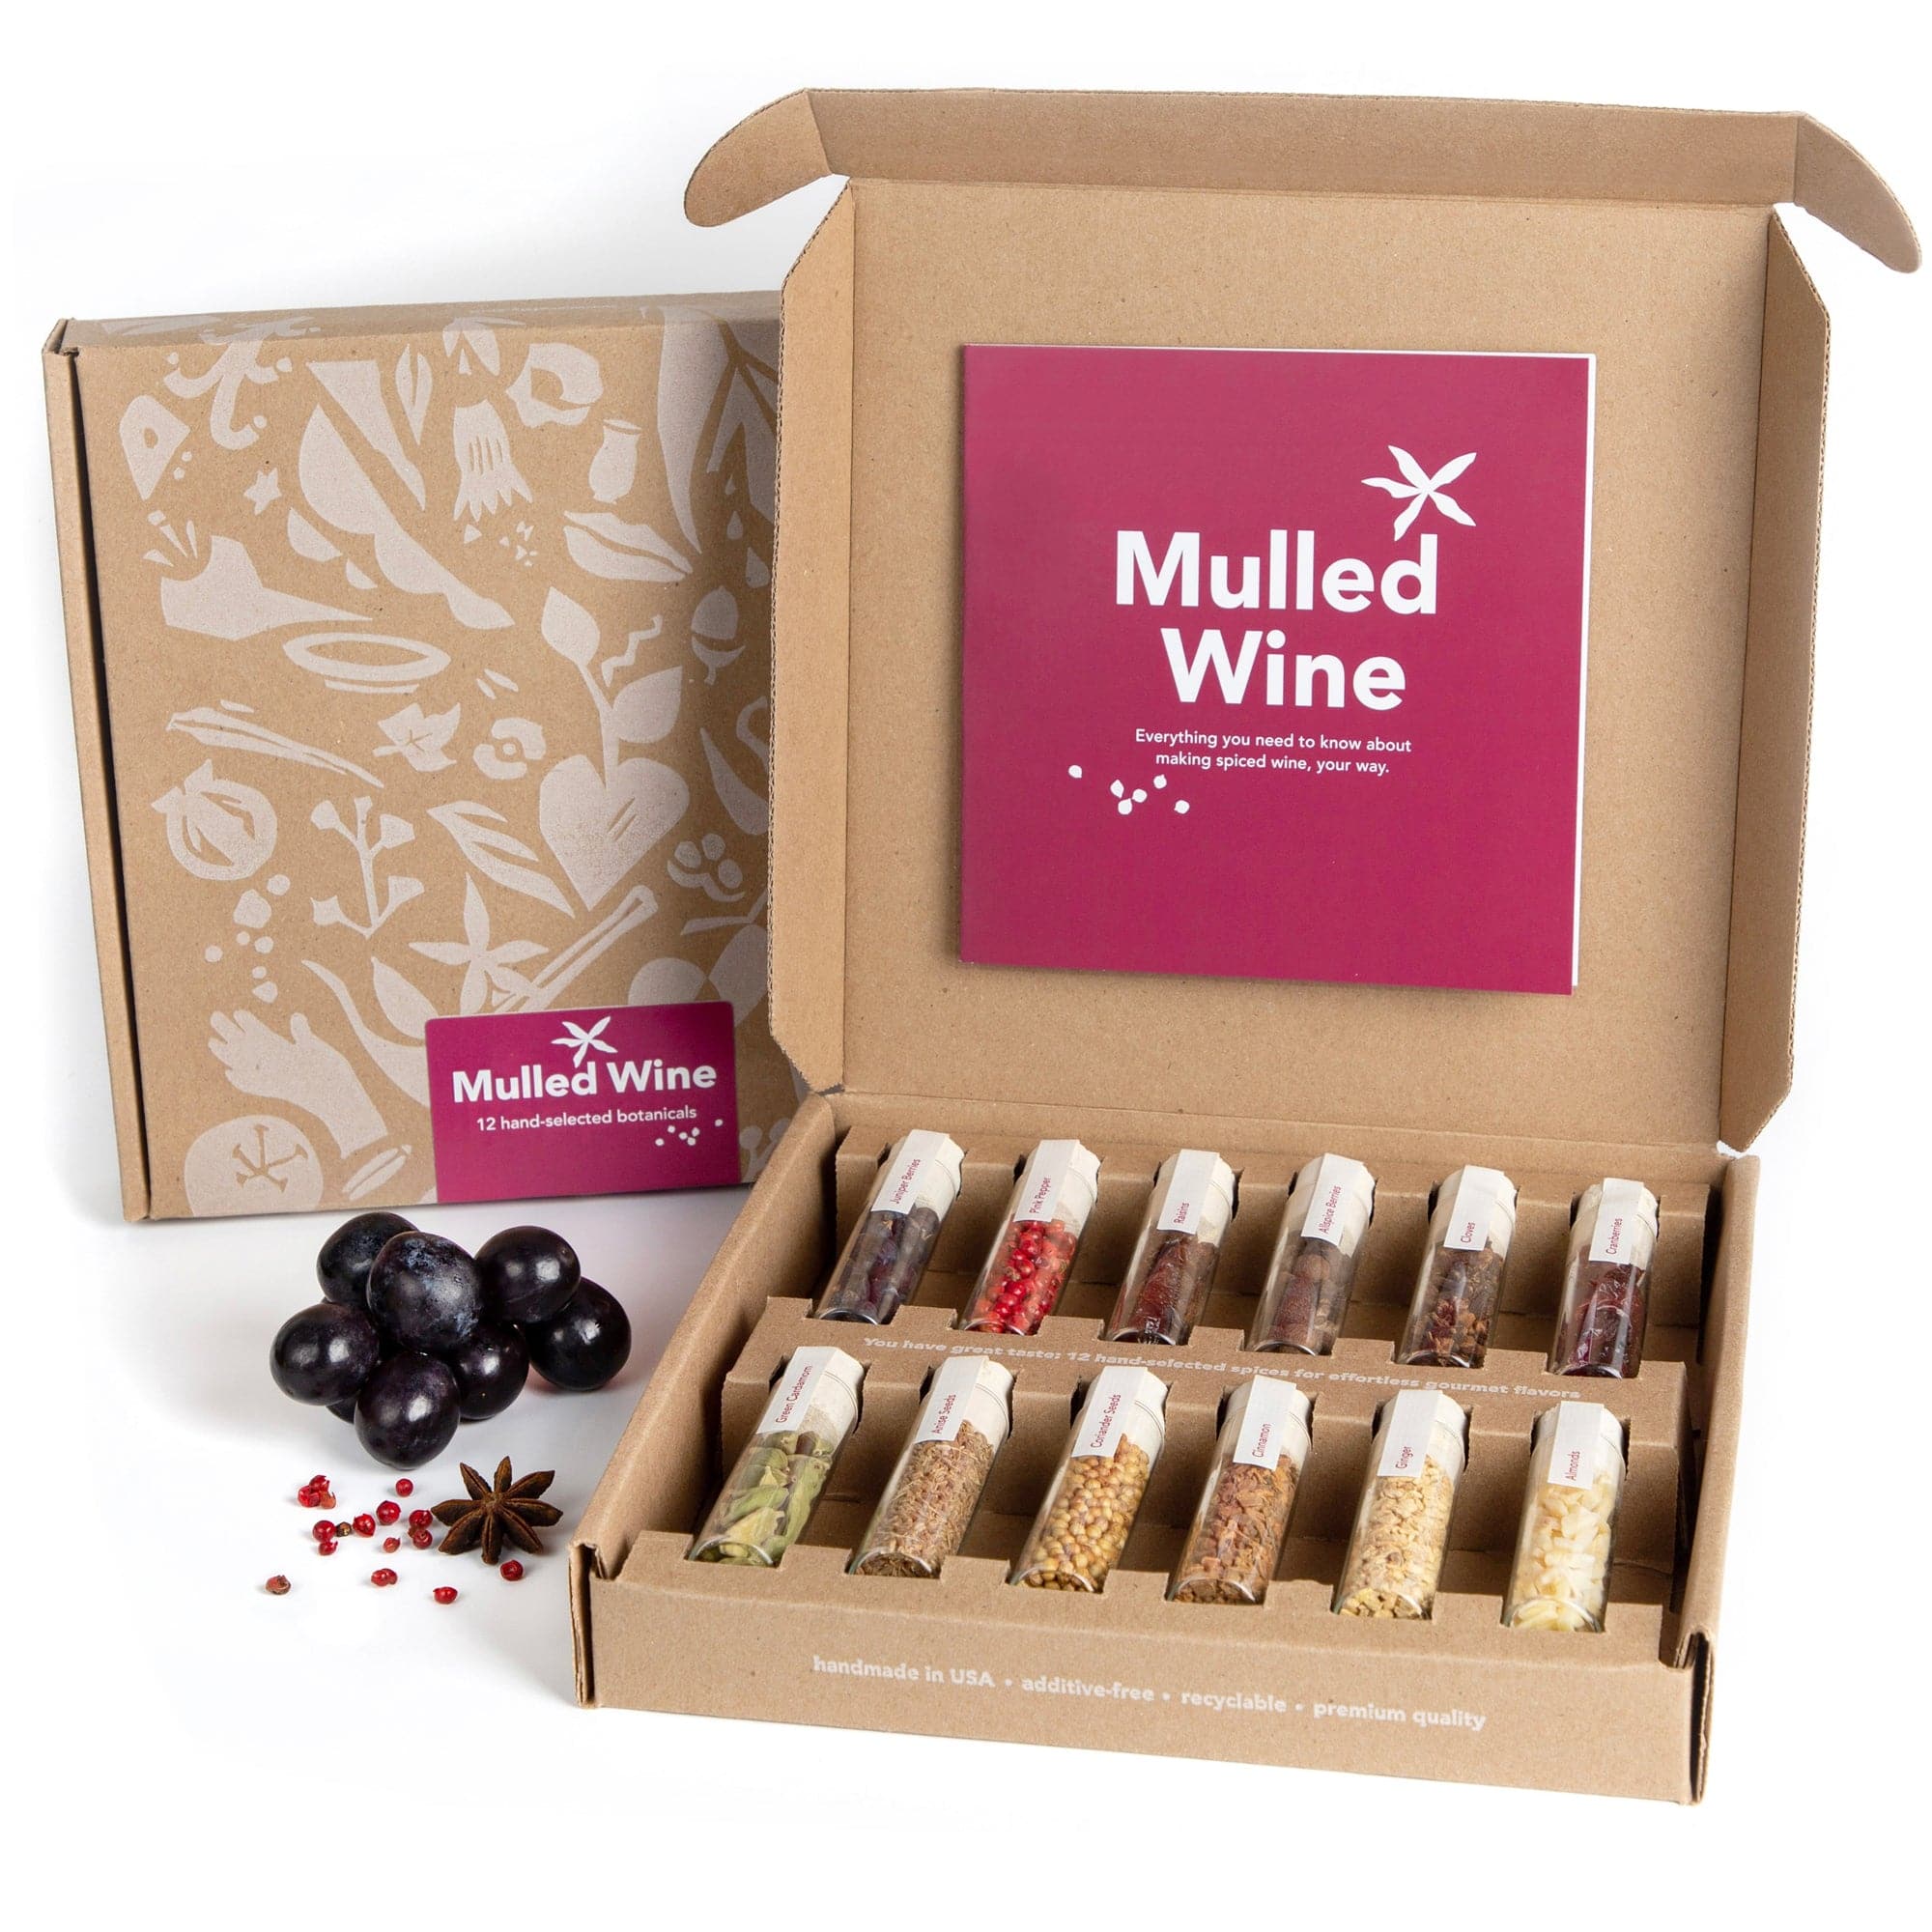 Mulled Wine Spice Kit – Honey & Spice